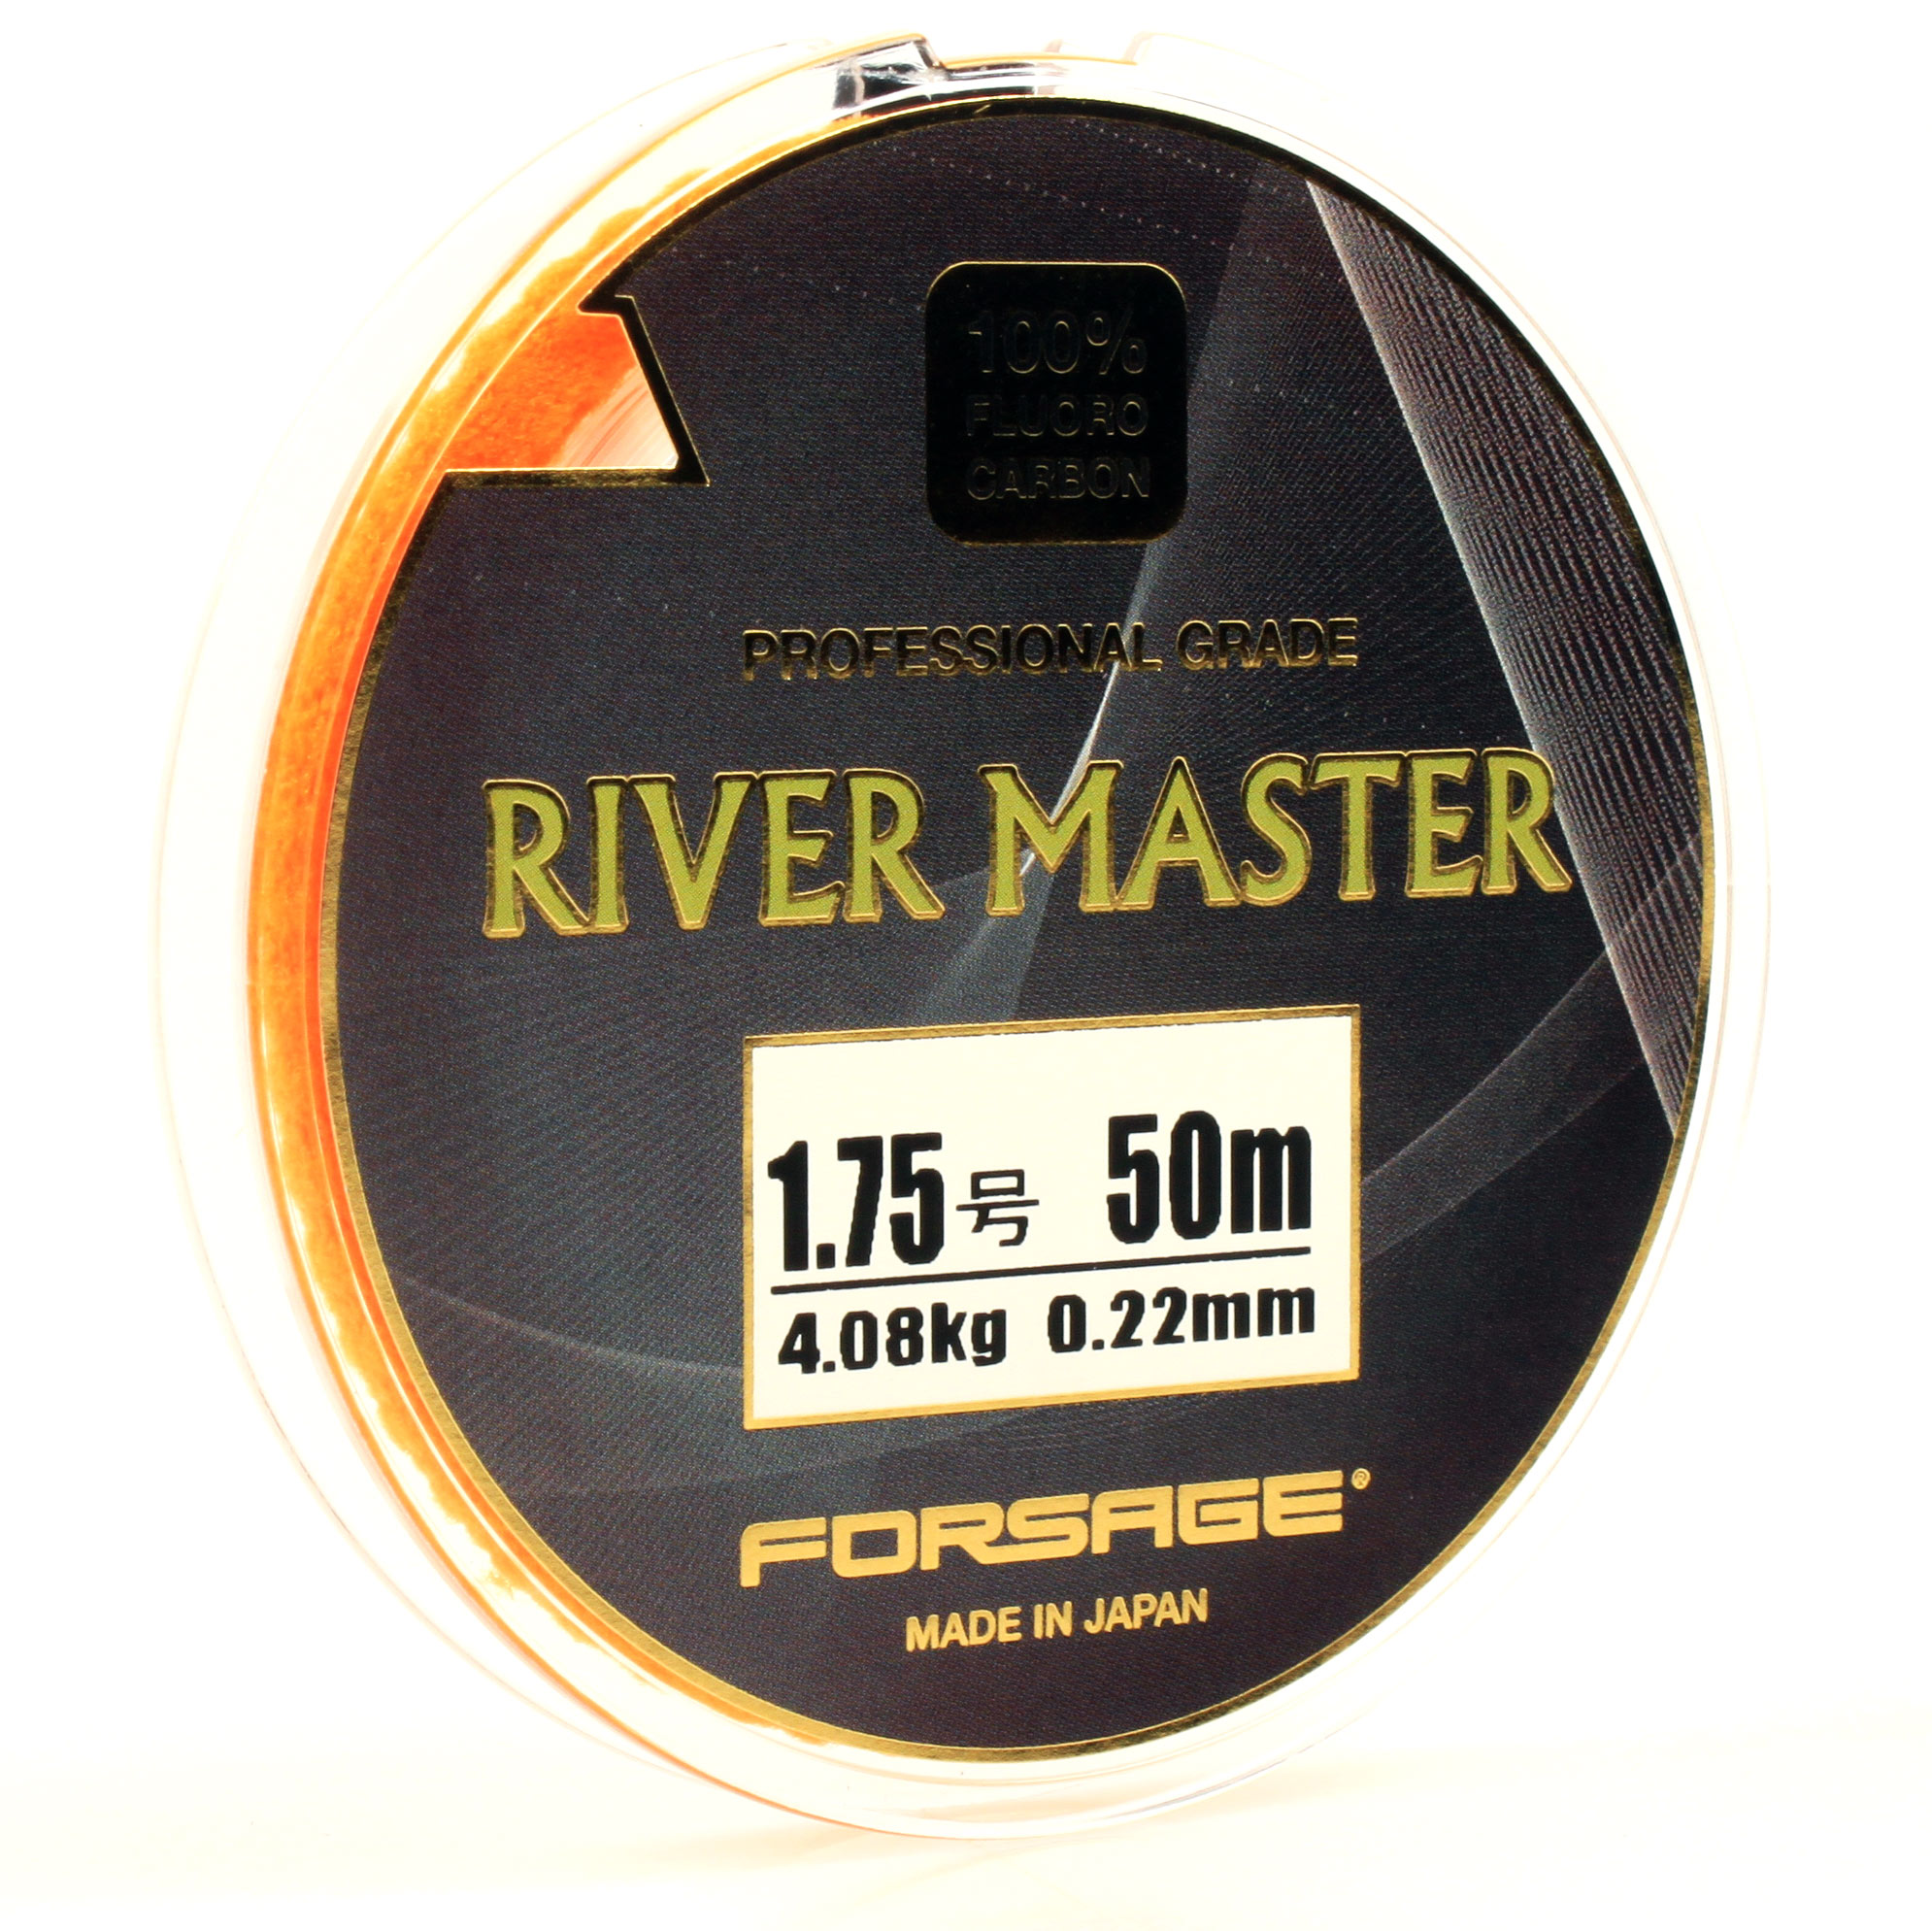 River master. Леска Forsage Military Fluorocarbon 40-50m. Шнур Forsage Nitro. Forsage River Master s-5`11 180cm 1-7 g. Кастингфорс Ривер мастер.